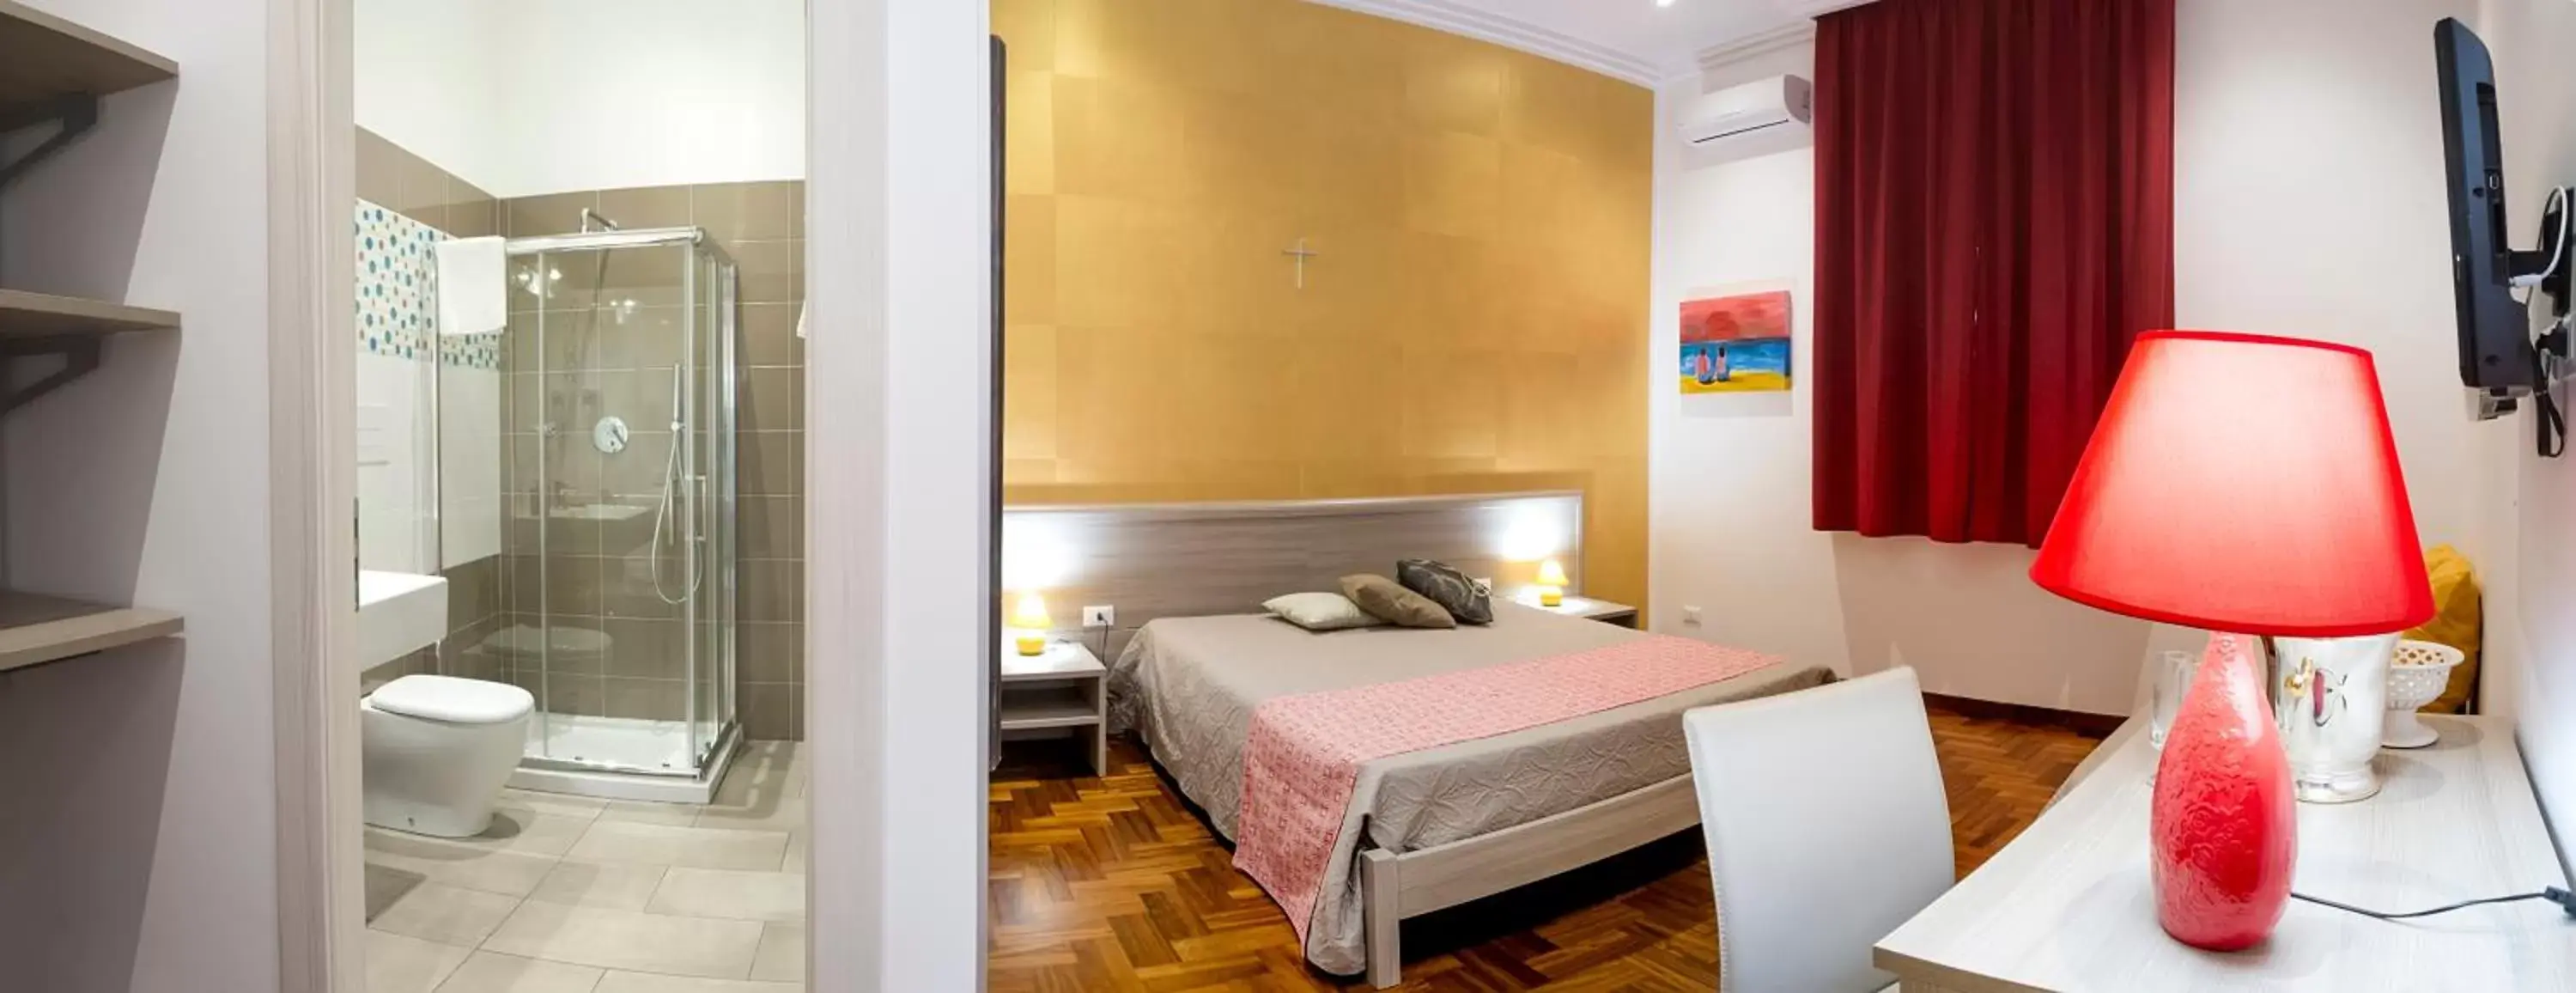 Bedroom, Room Photo in La Rocca Scavata